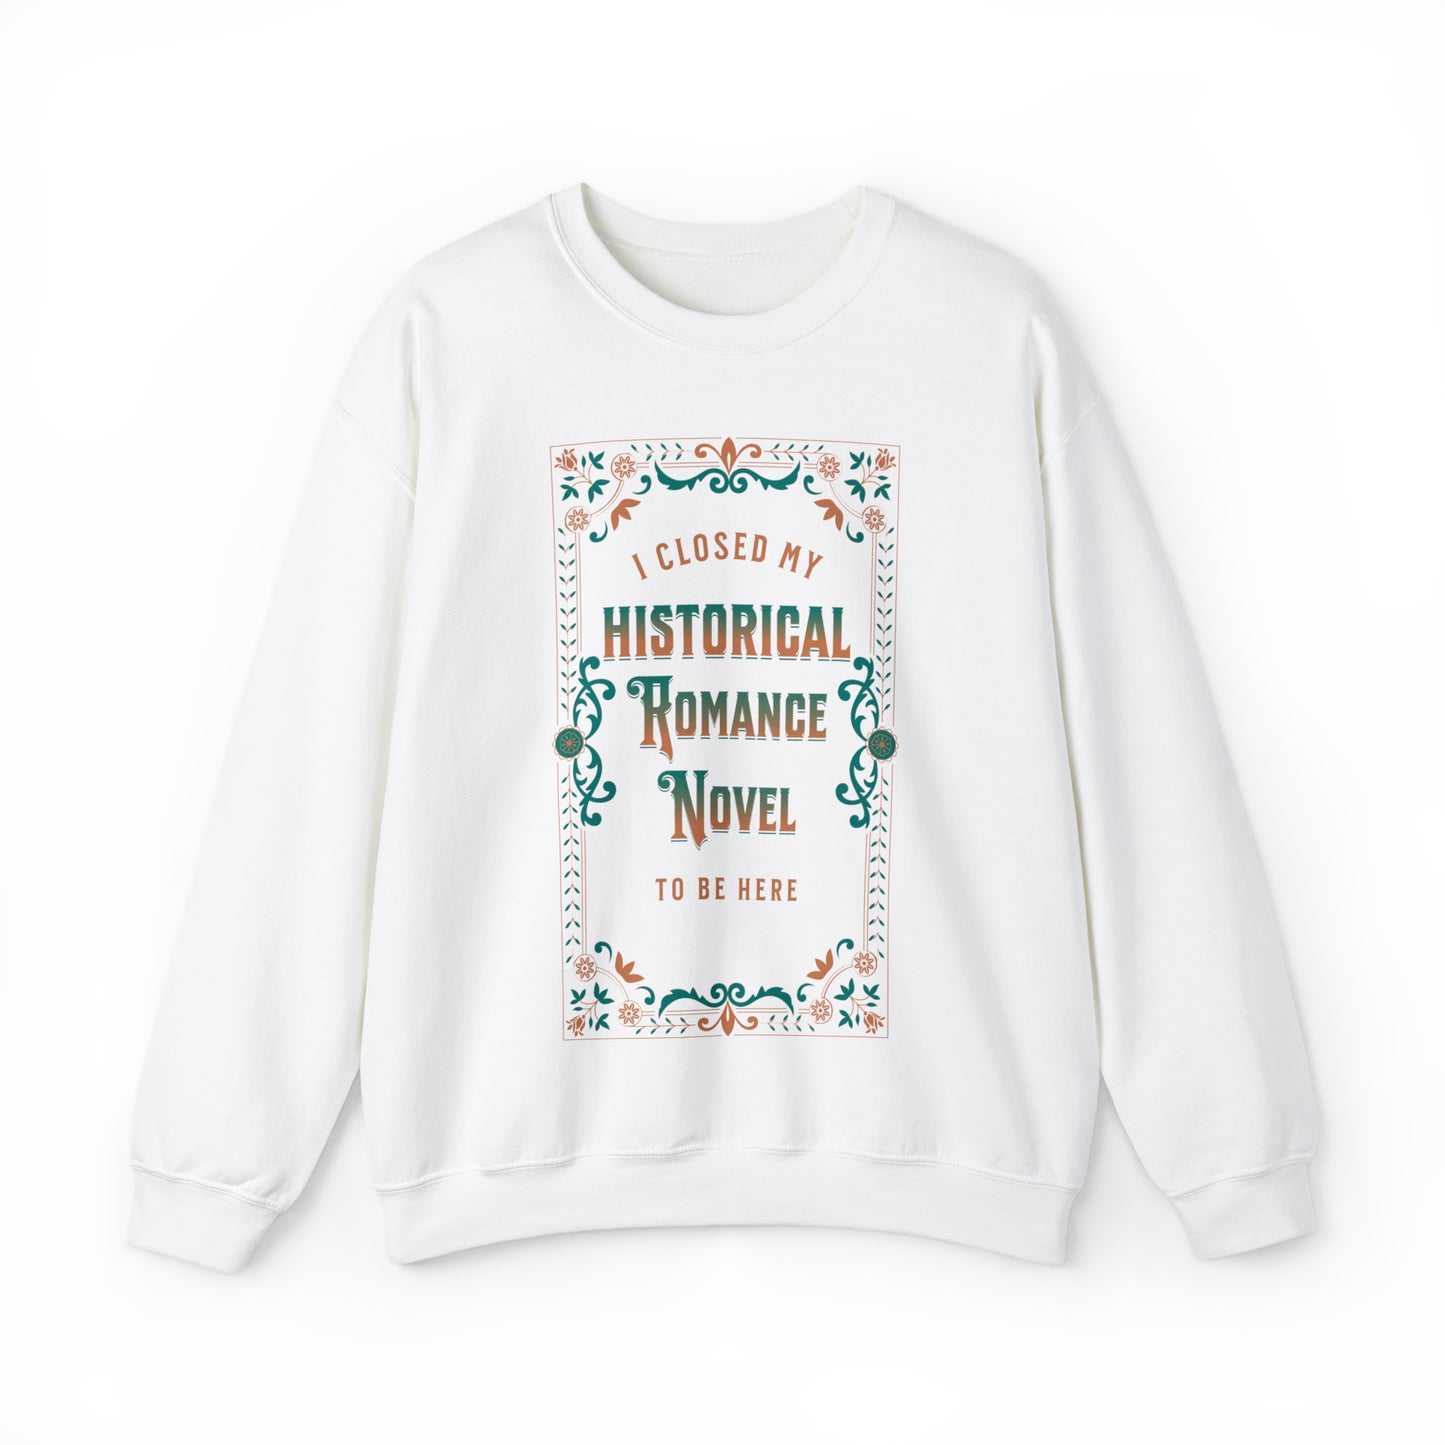 Jane Austen Sweatshirt - I Closed My Historical Romance Novel To Be Here